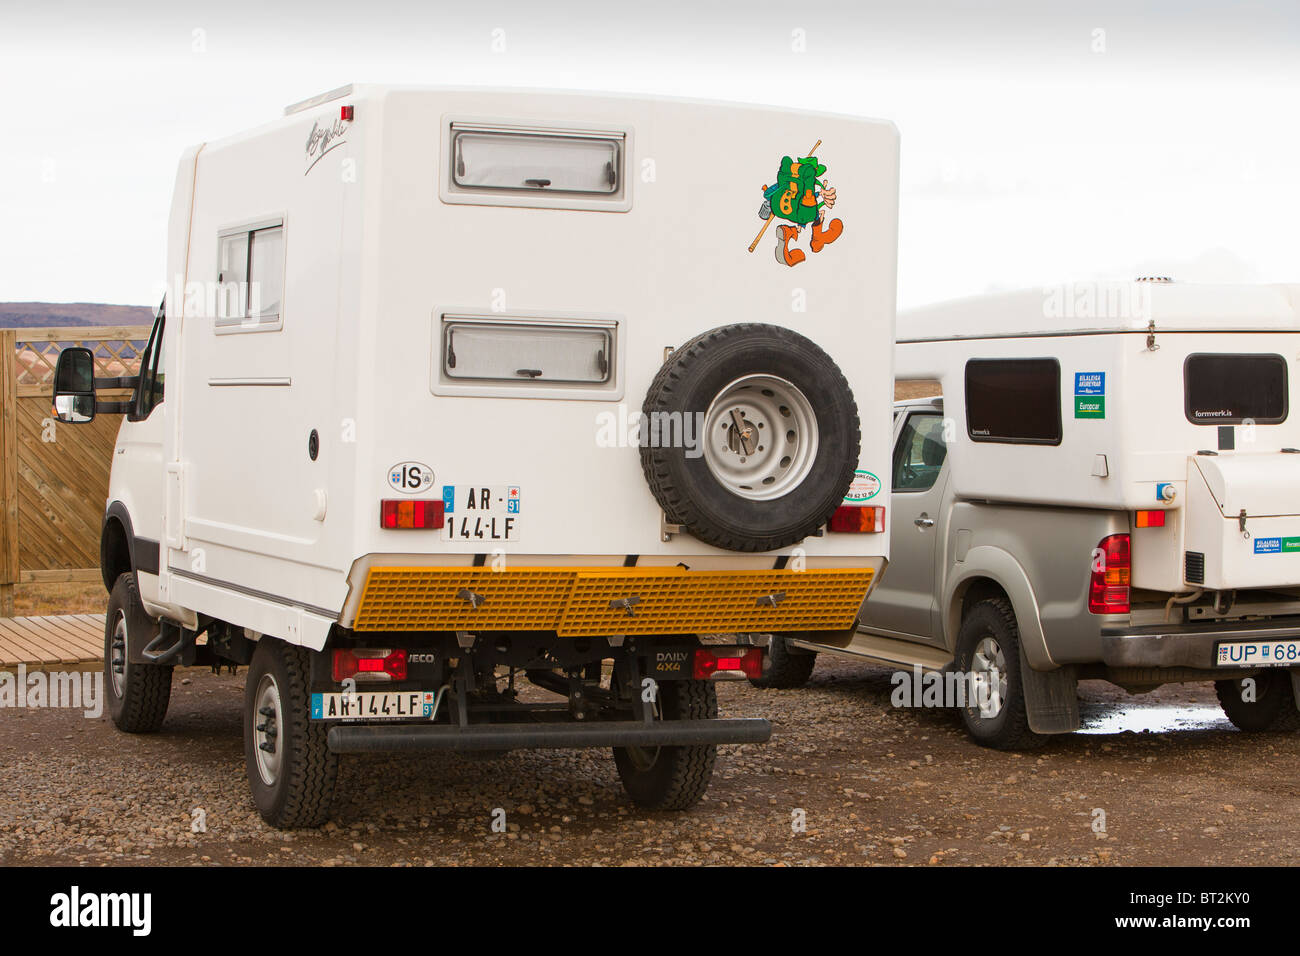 four wheel drive camper van